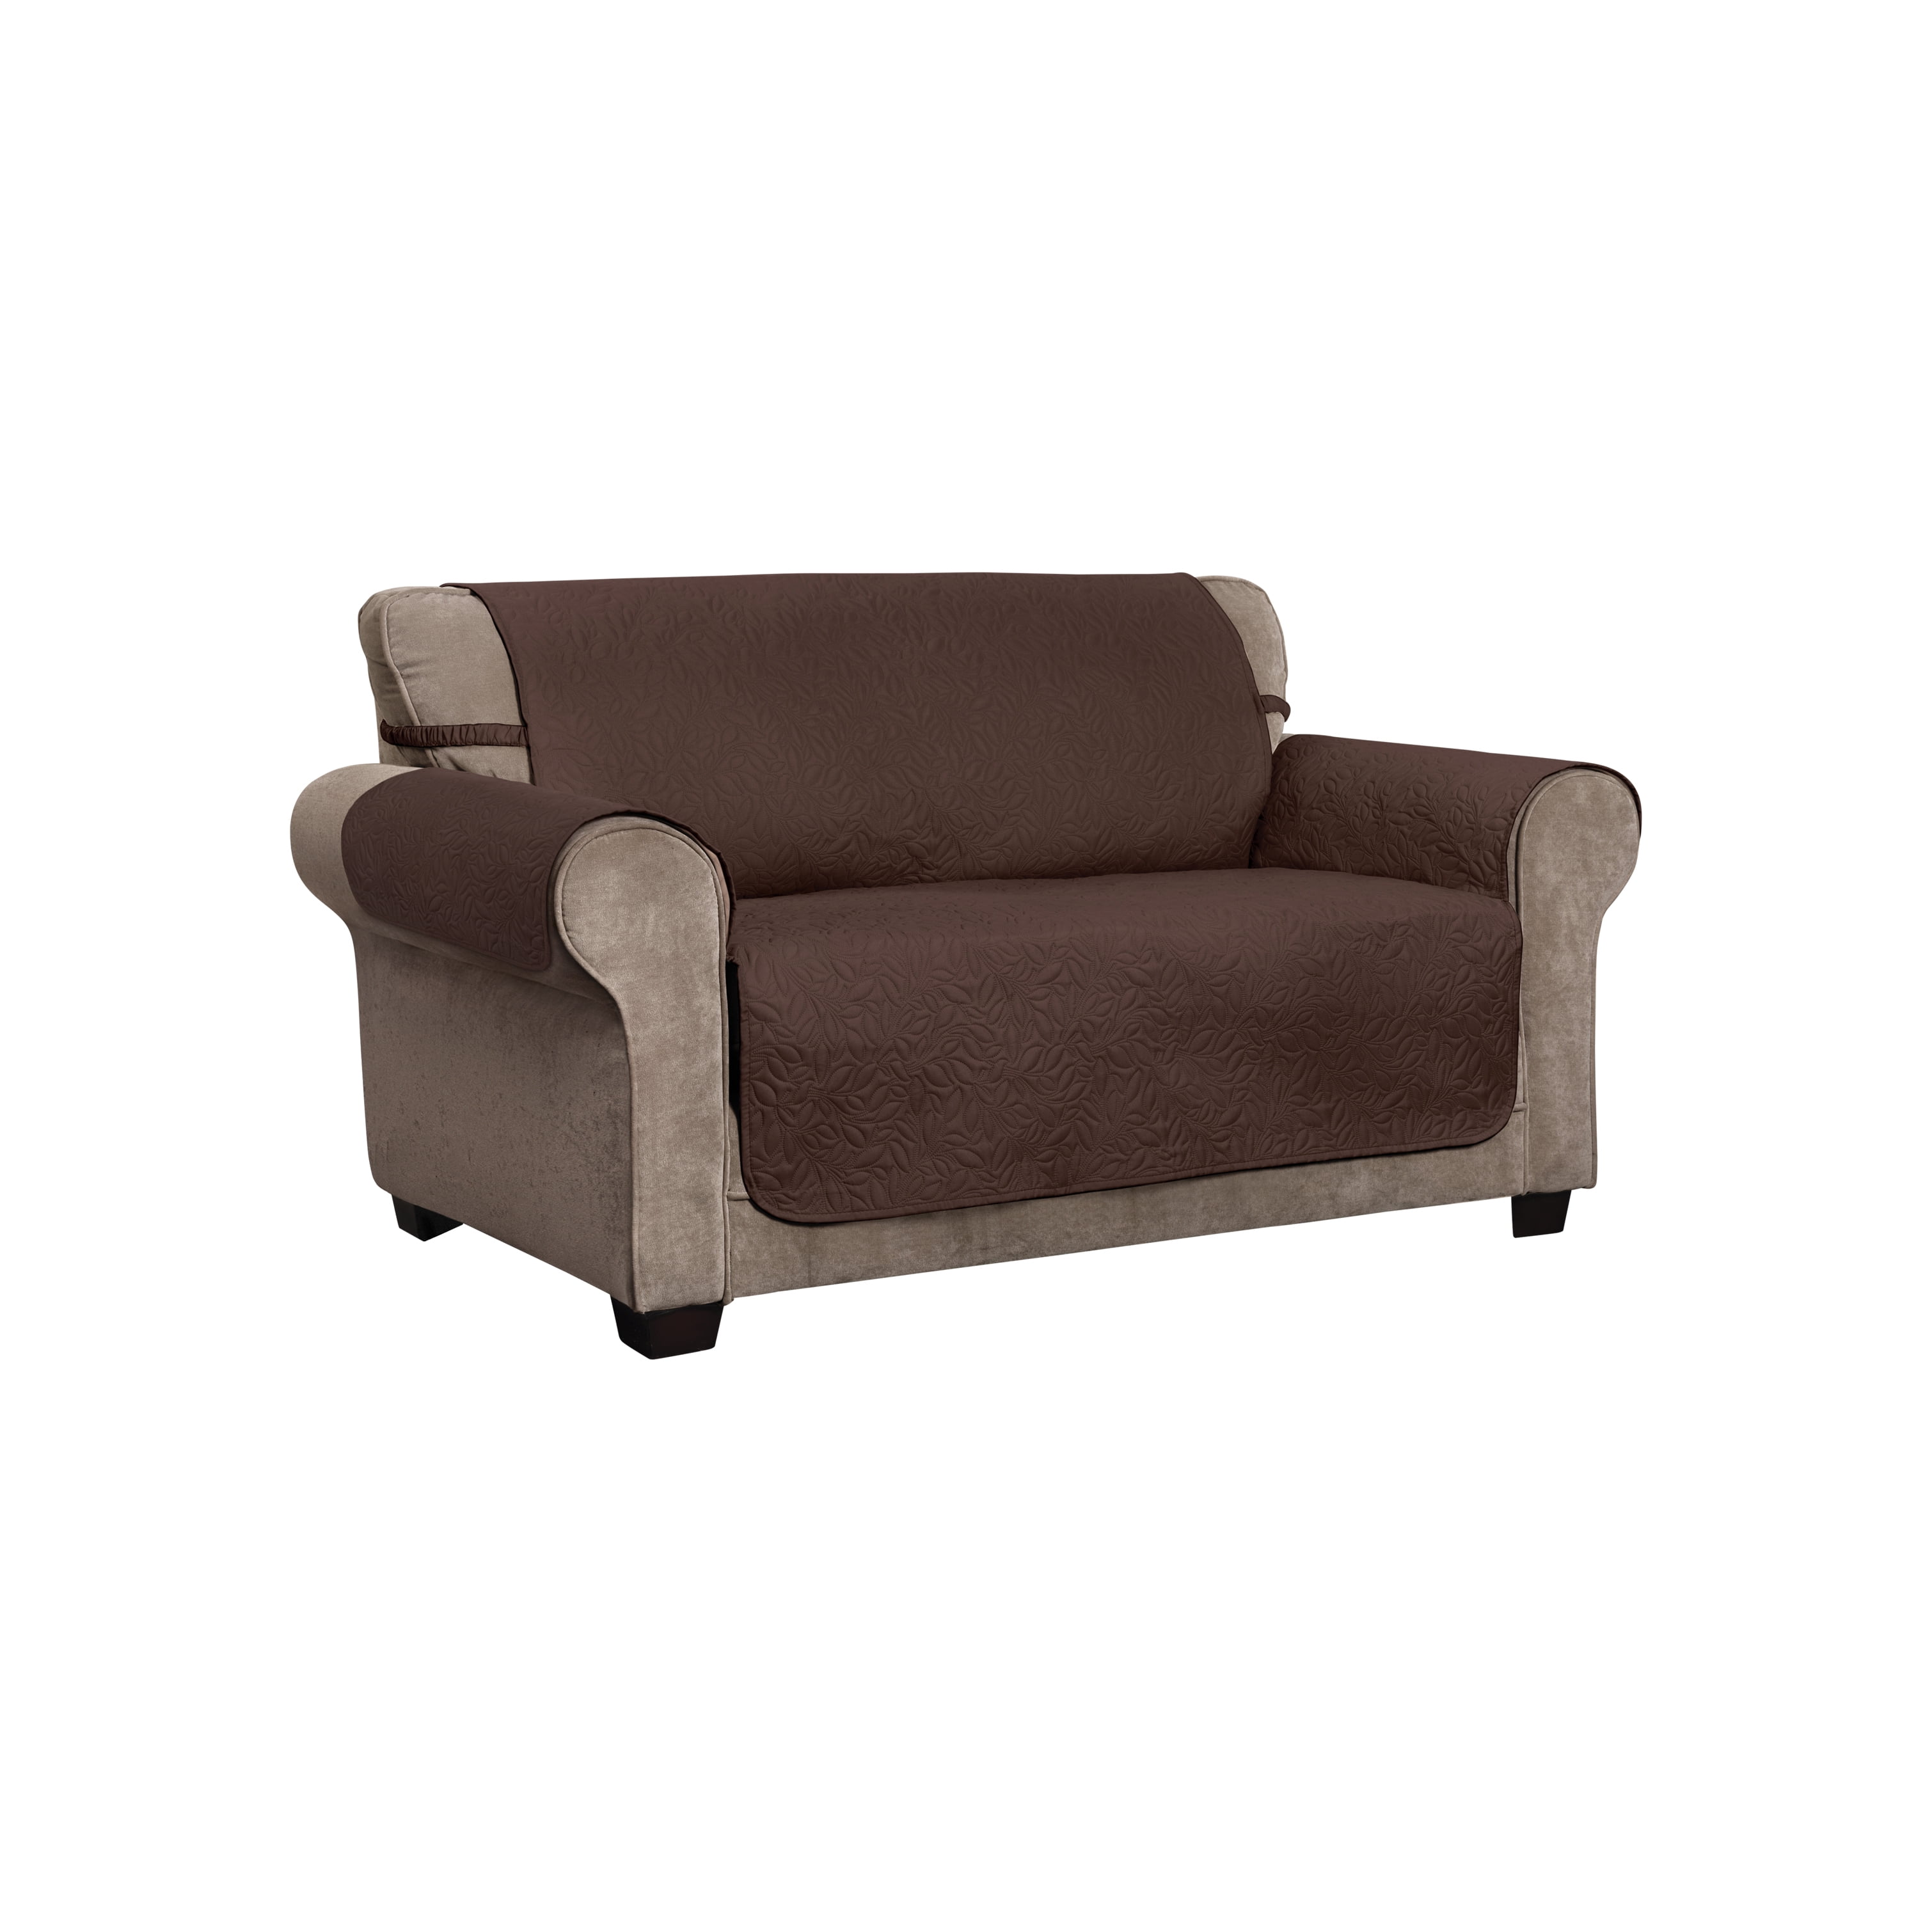 Ripple Plush Secure Fit Sofa Furniture Cover Slipcover Natural Foam Noodels NEW 